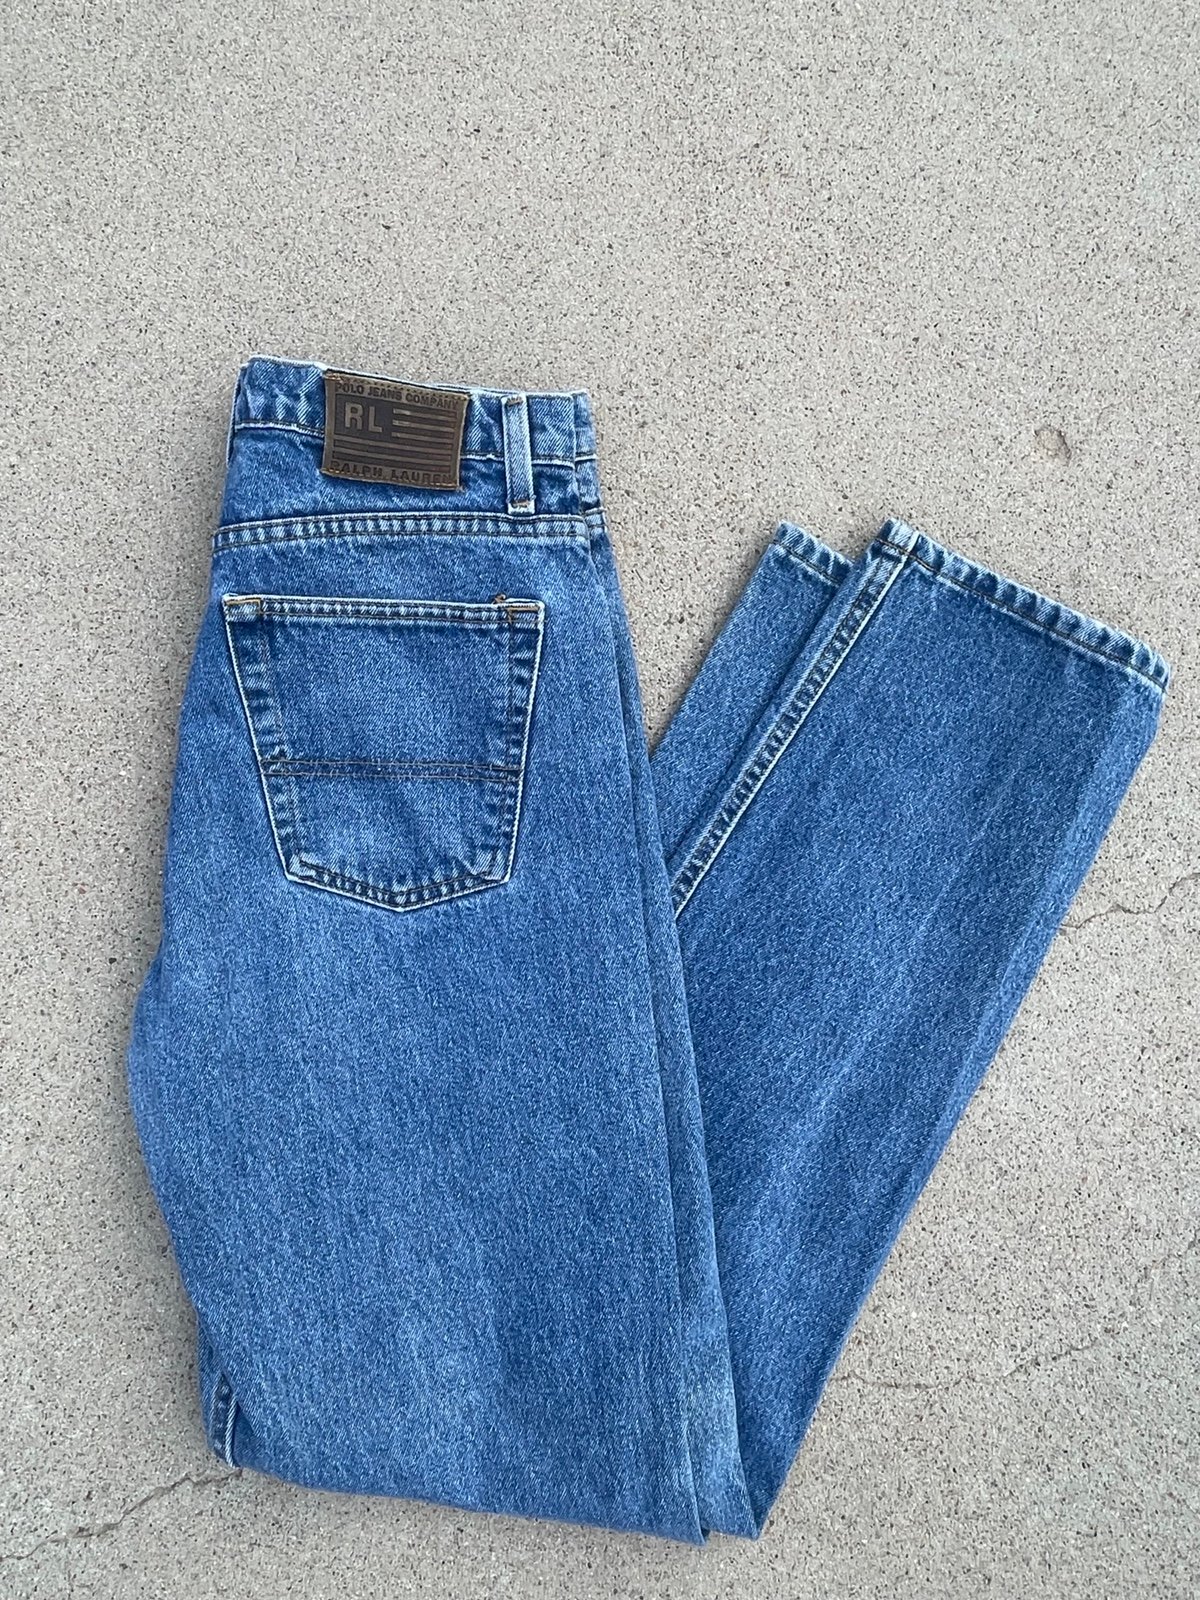 Nice Ralph Lauren Polo Jeans Co. Denim Pants GqgEoy8TJ 